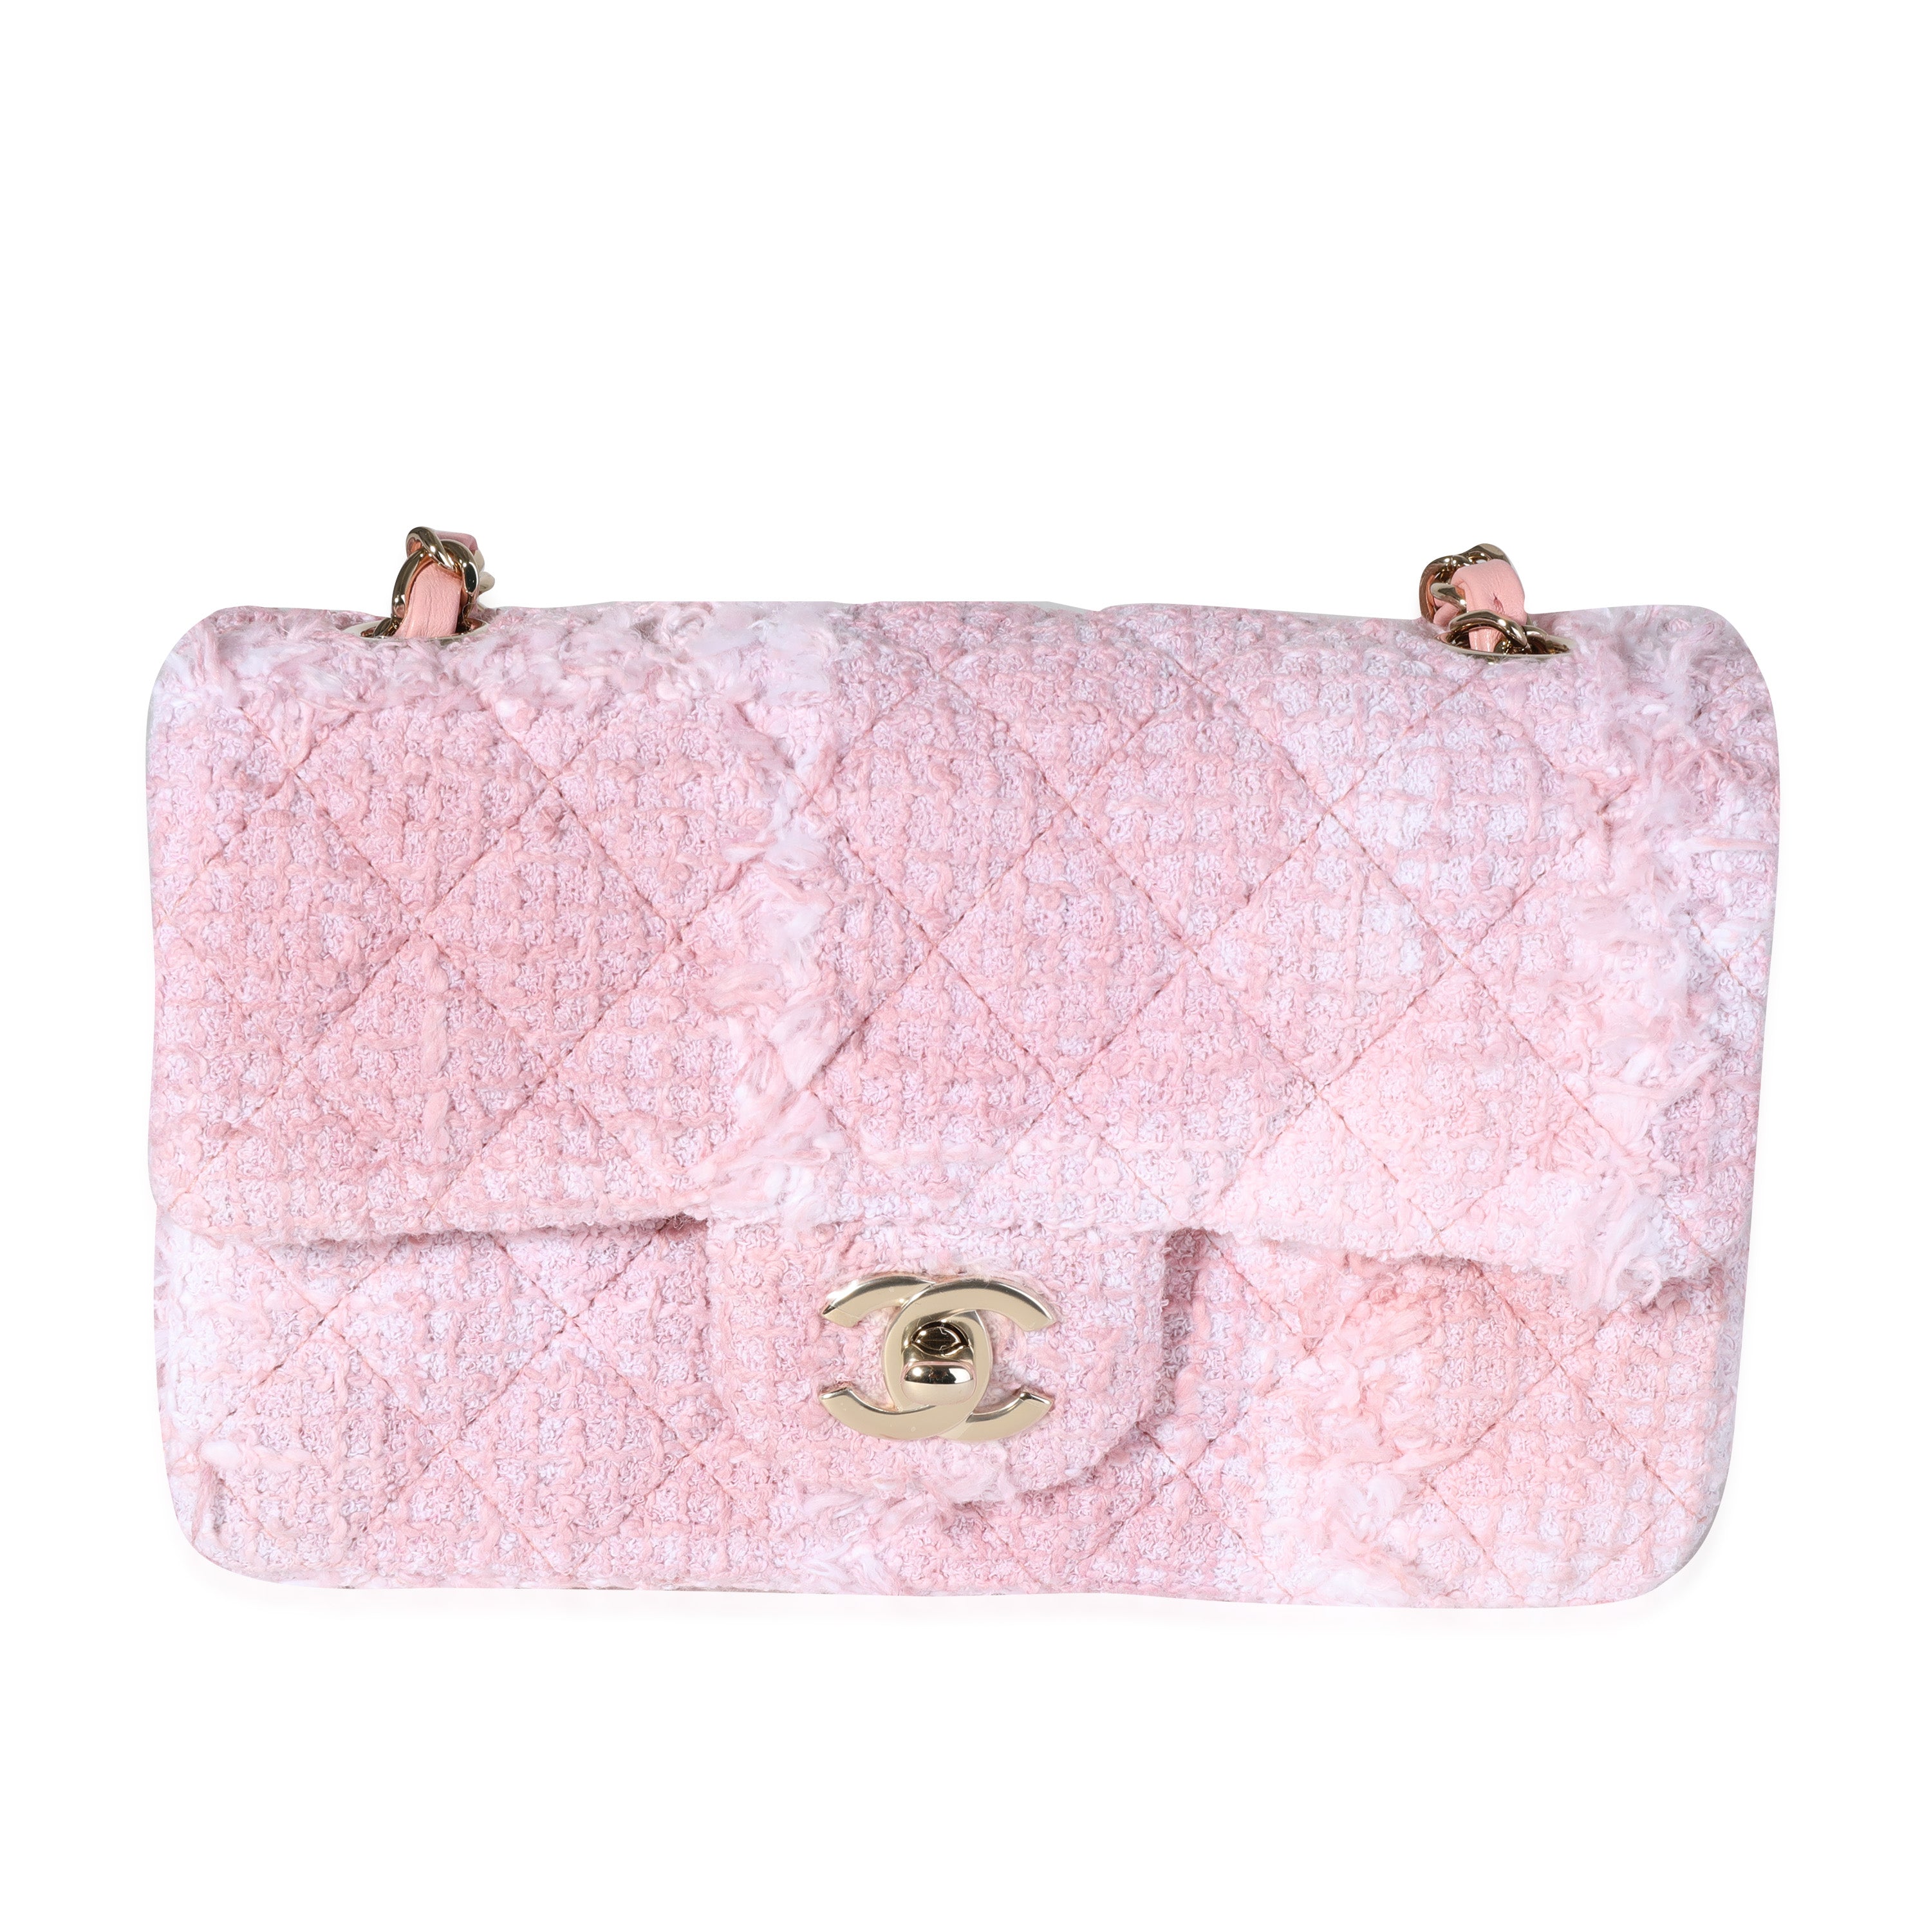 My Wife's New Chanel Mini Classic Rectangular Flap Bag Pink With LGHW, GenX GenY GenZ